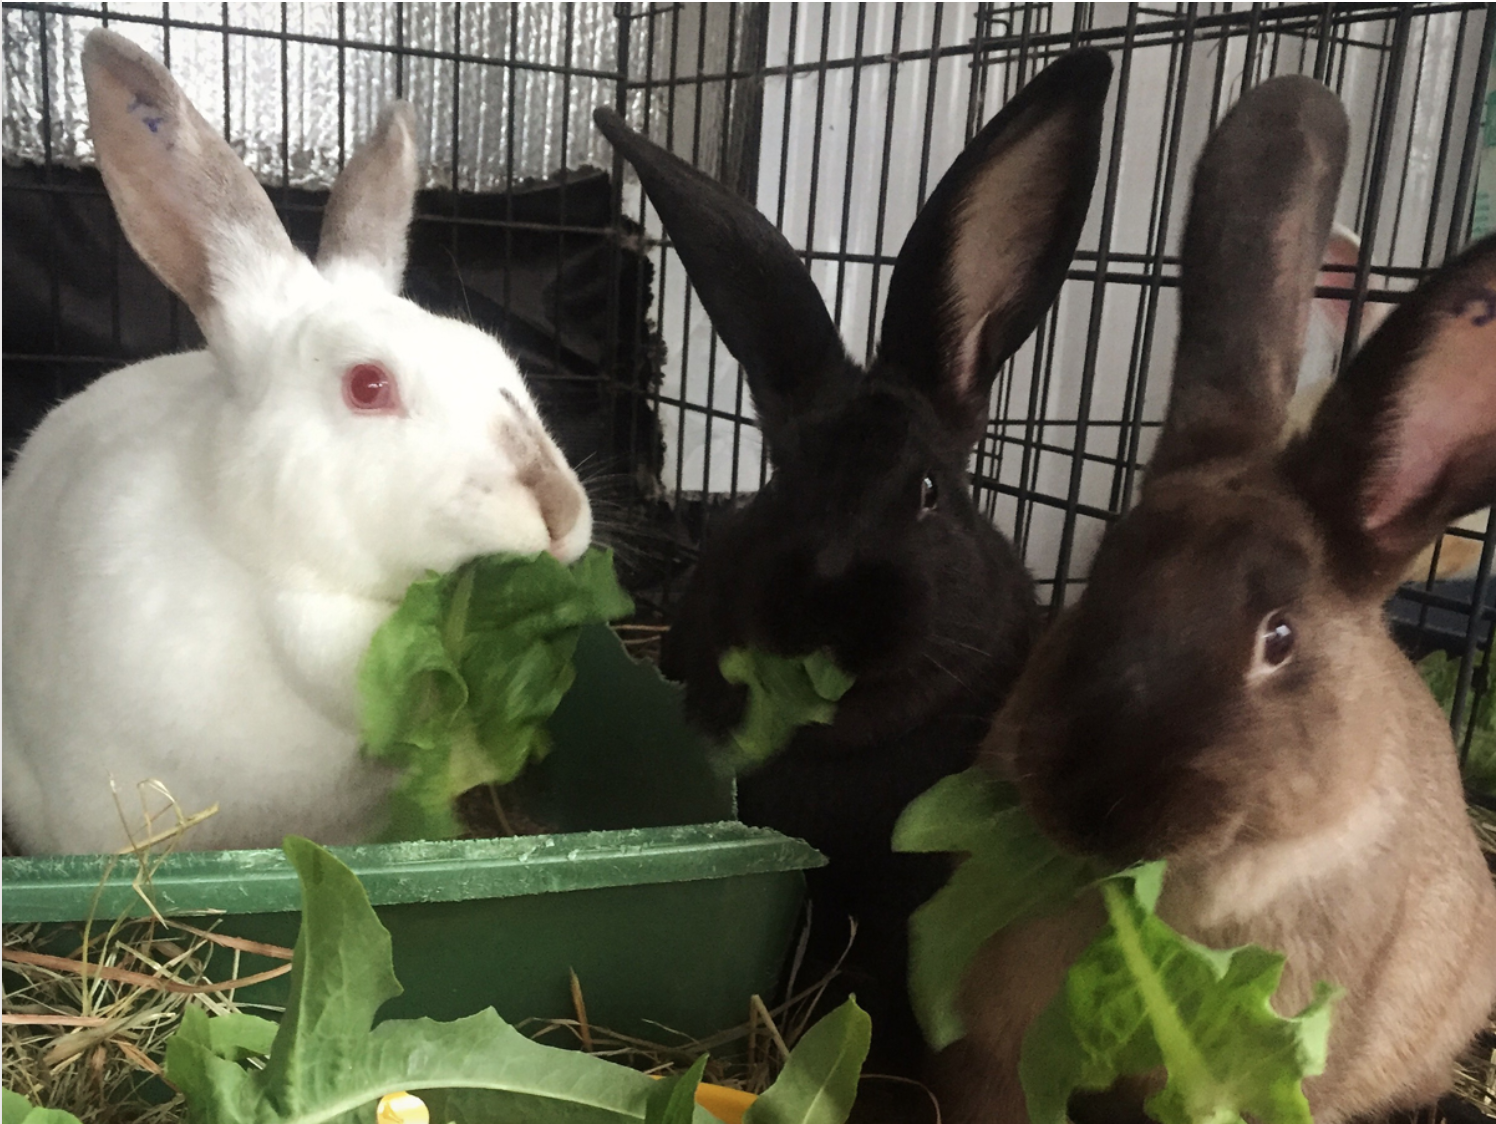 White, black and brown rabbits eating lettuce.